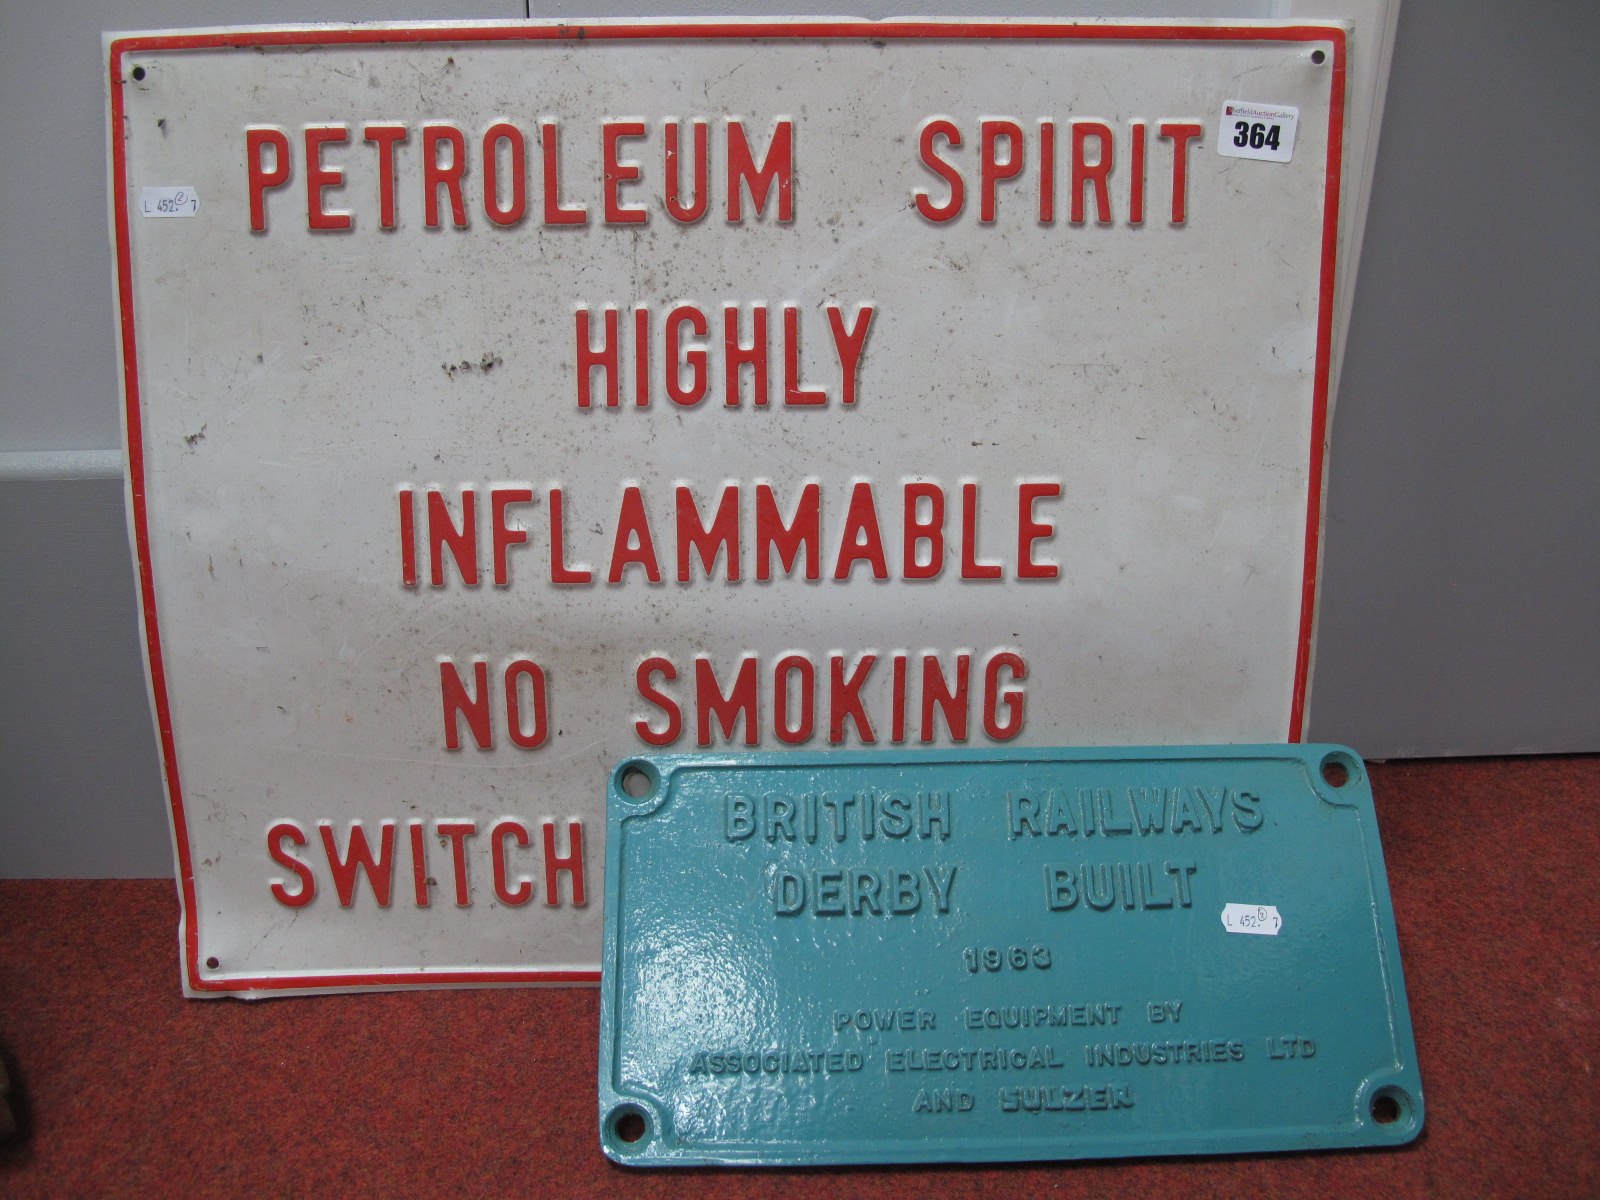 British Railways Derby Built 1963 Sign, 'P27147 25044' and 'Petroleum Spirit' by L.A. Musson